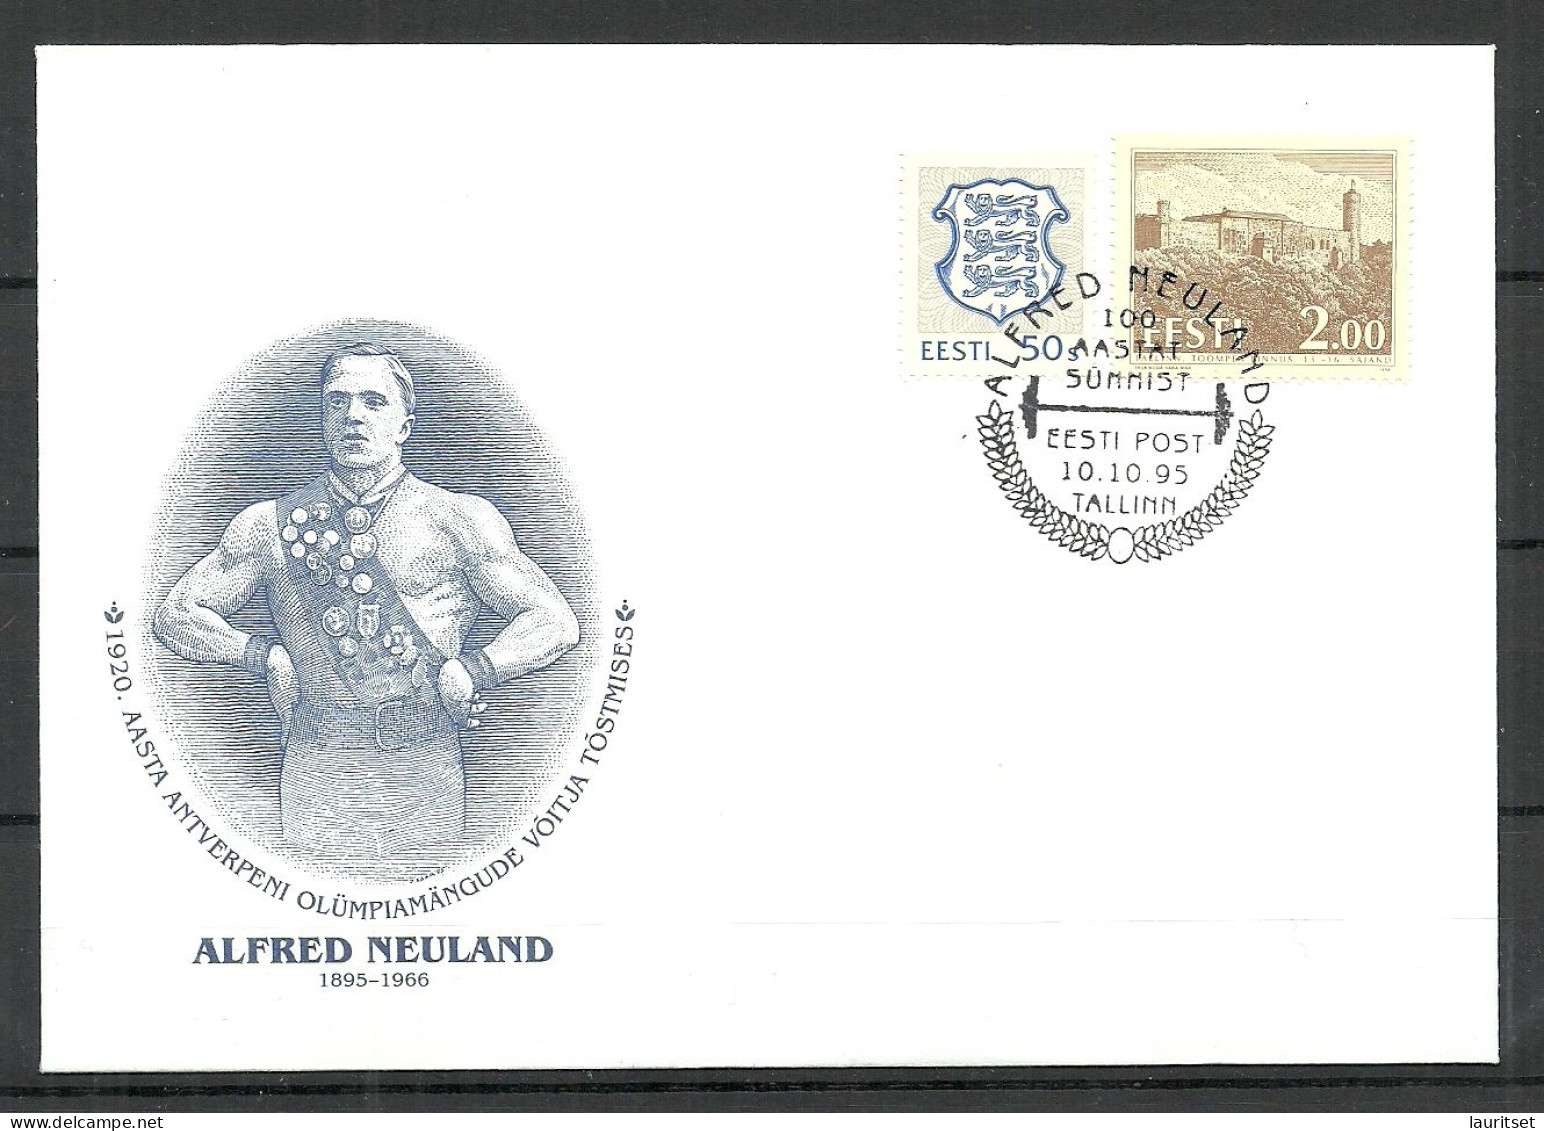 Estland Estonie Estonia 1996 Alfred Neuland Antwerpen Olympic Games Gewichtheben Goldmedal Special Cancel Sonderstempel - Ete 1920: Anvers